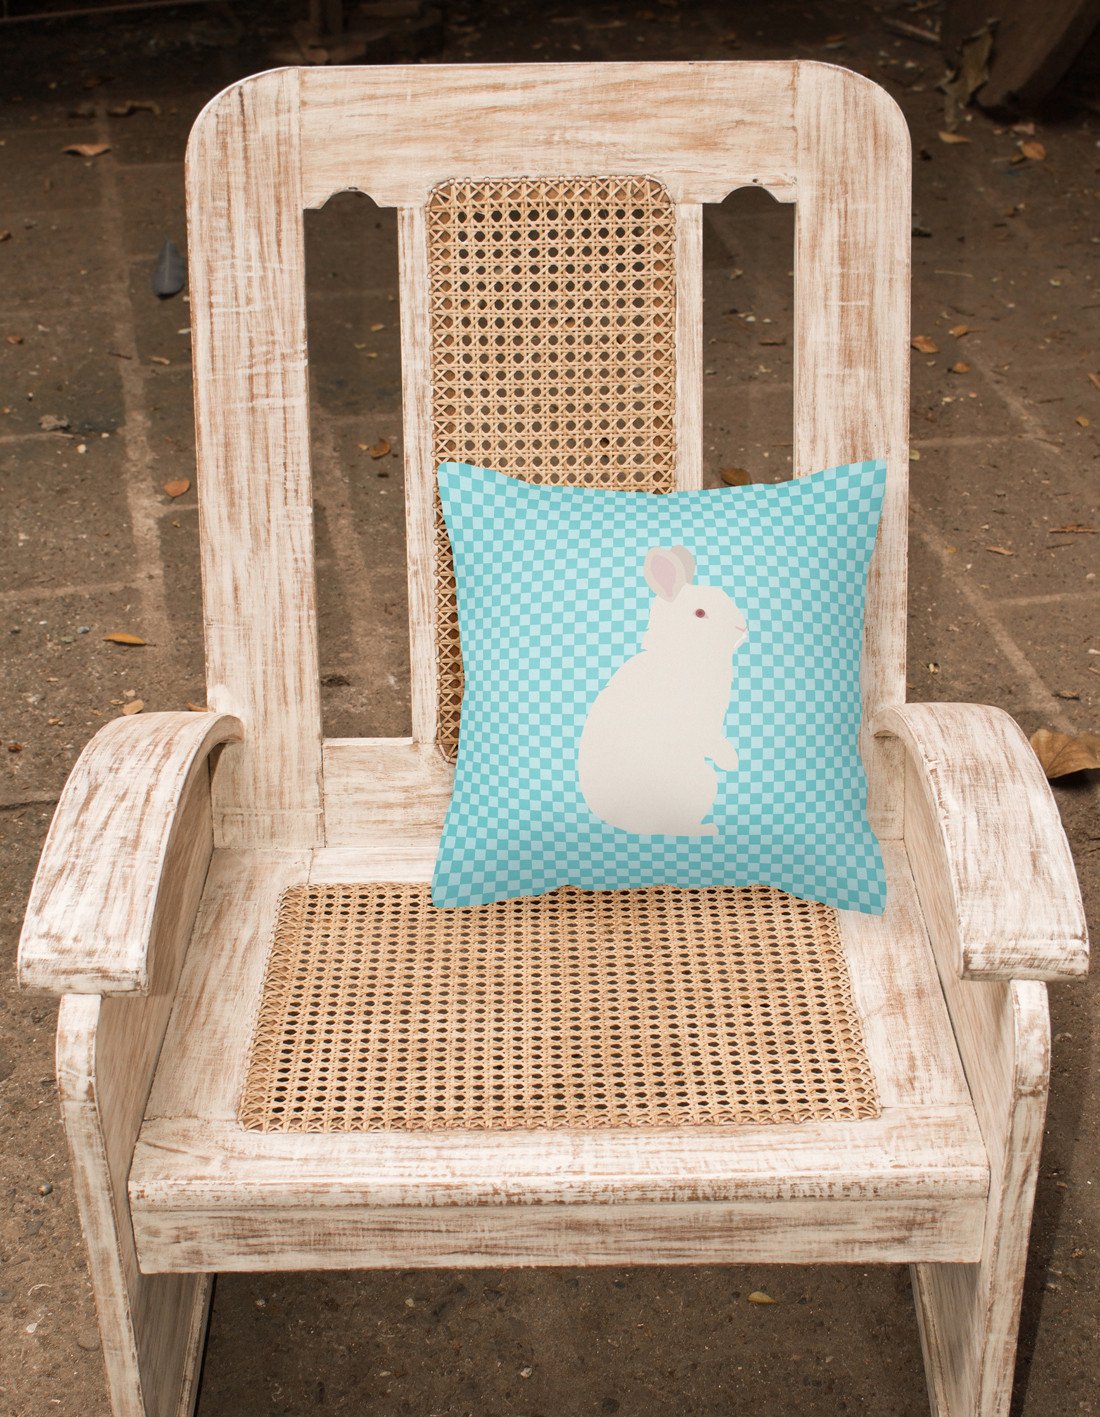 New Zealand White Rabbit Blue Check Fabric Decorative Pillow BB8139PW1818 by Caroline's Treasures